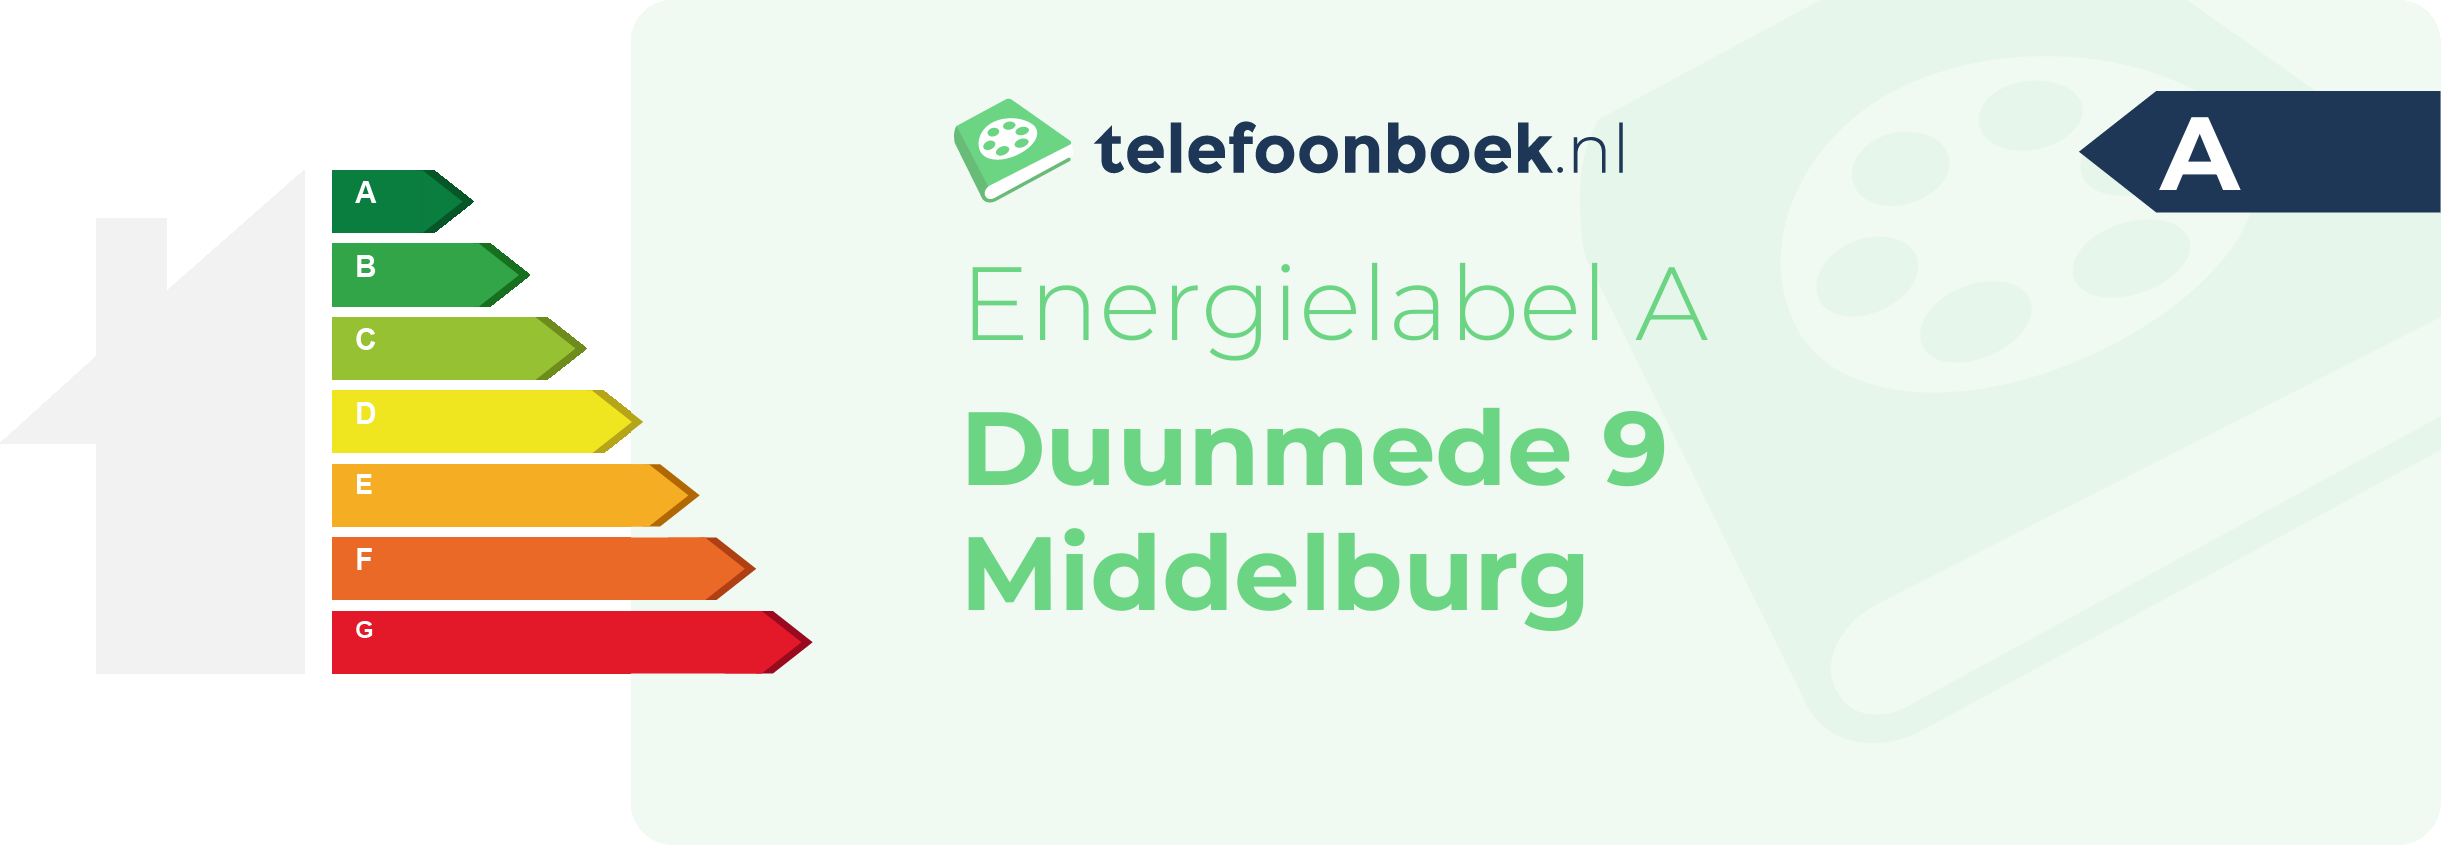 Energielabel Duunmede 9 Middelburg